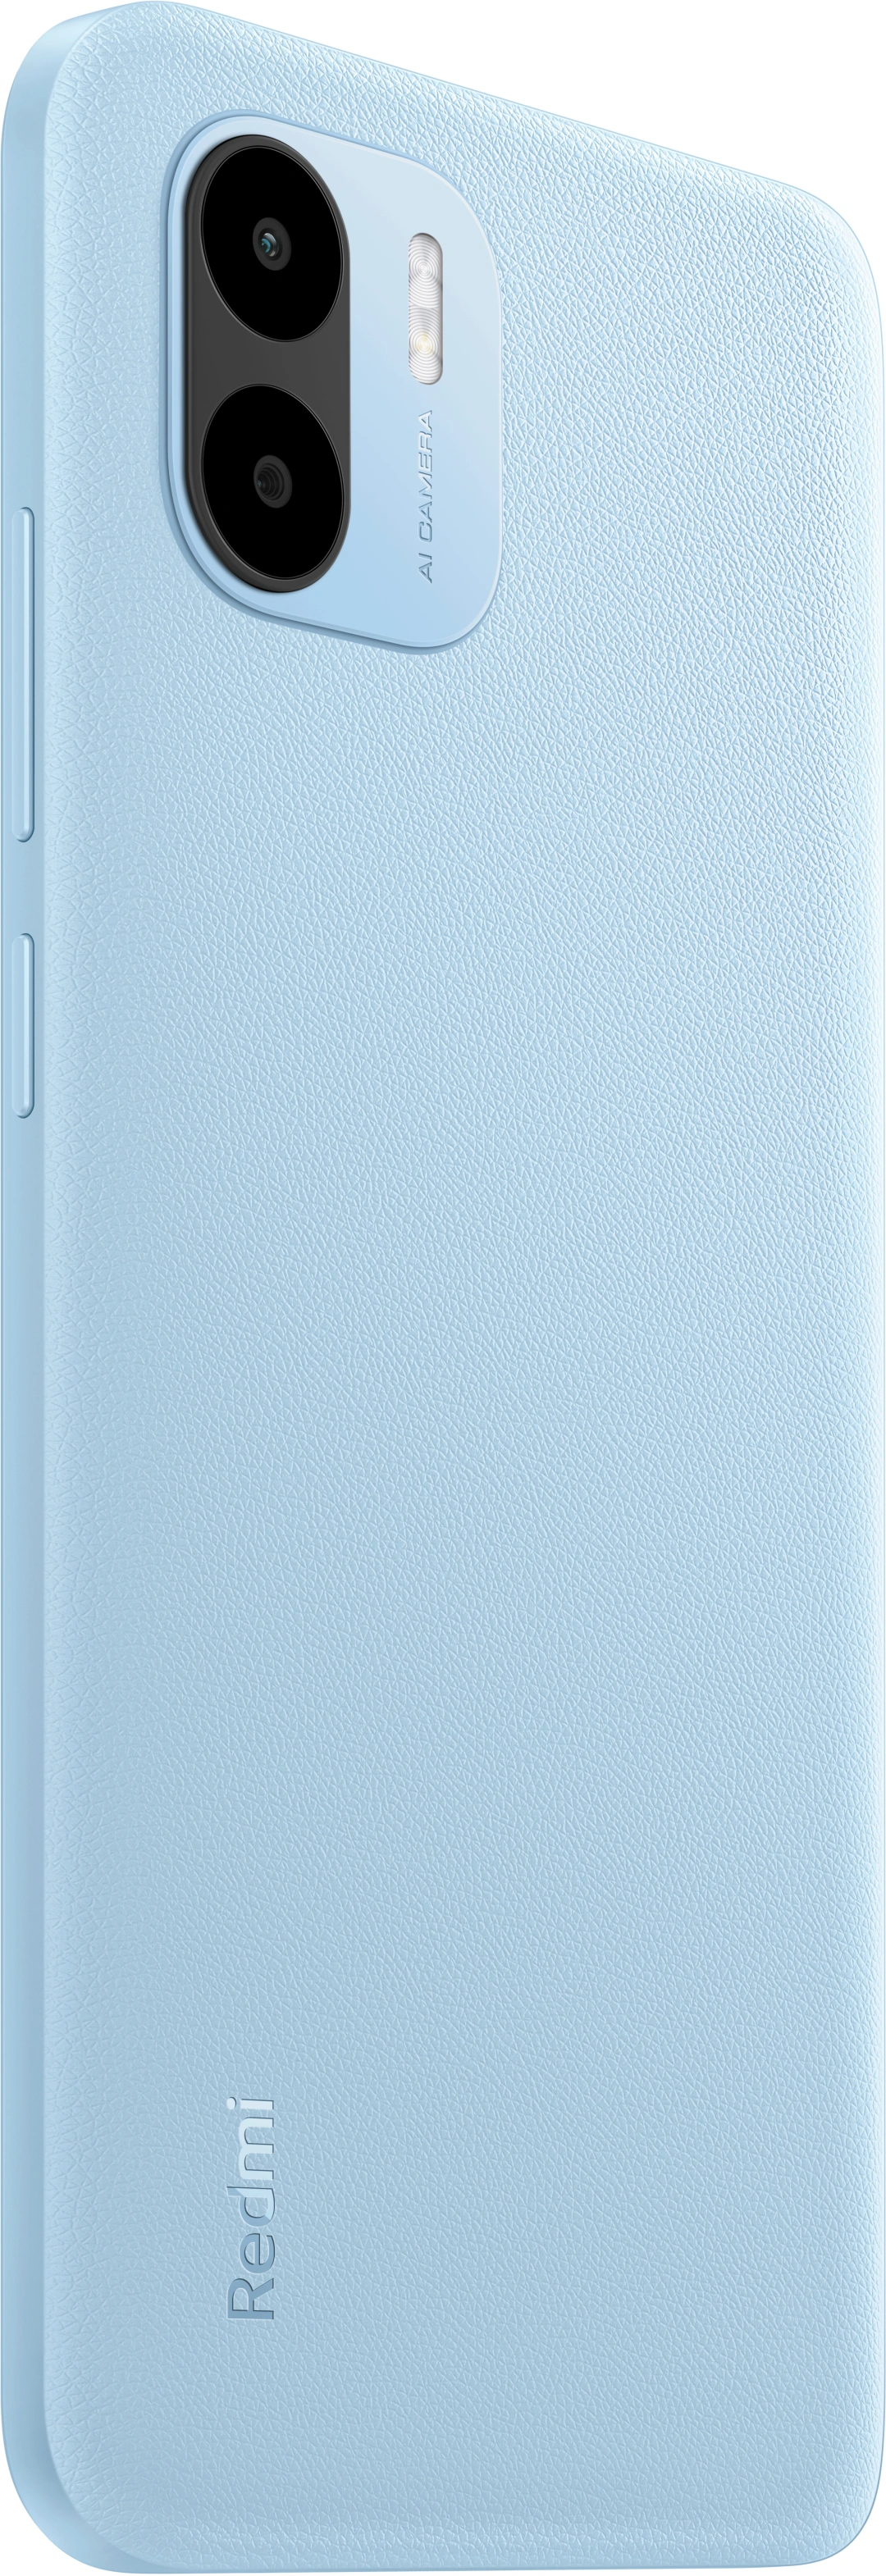 Xiaomi Redmi A2 2/32GB, light blue